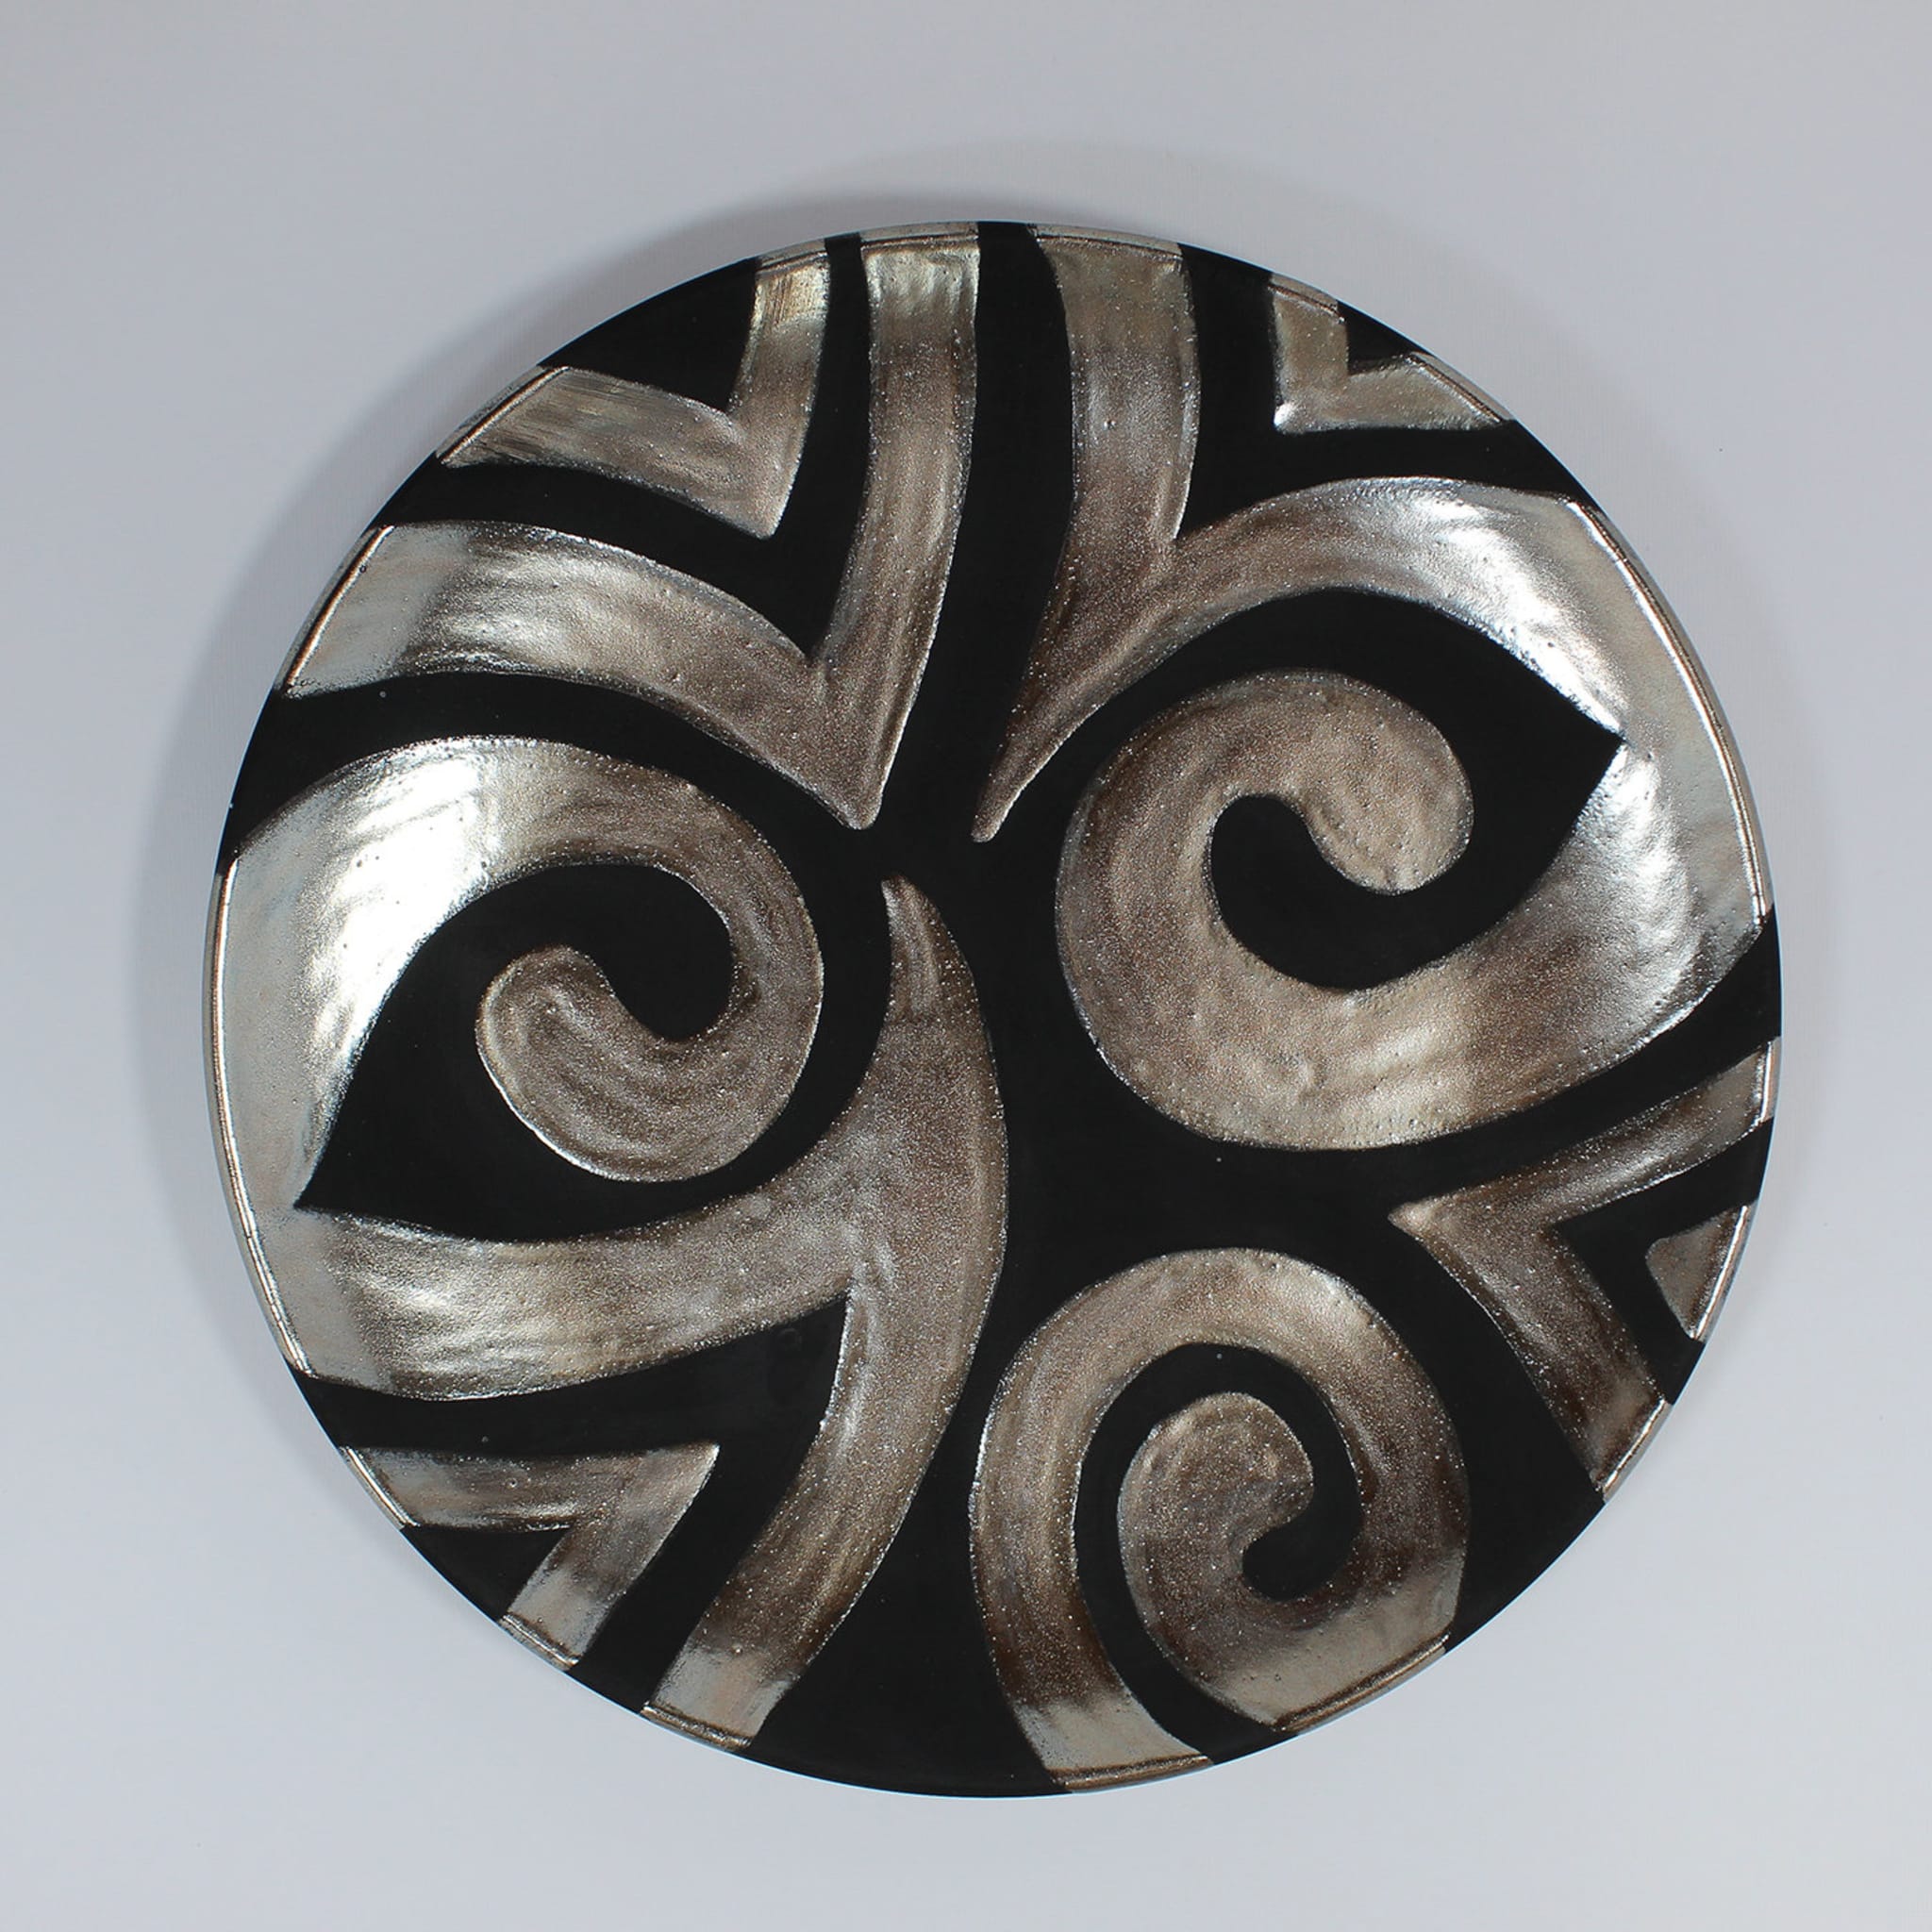 Tribal2 ceramic plate - Alternative view 1